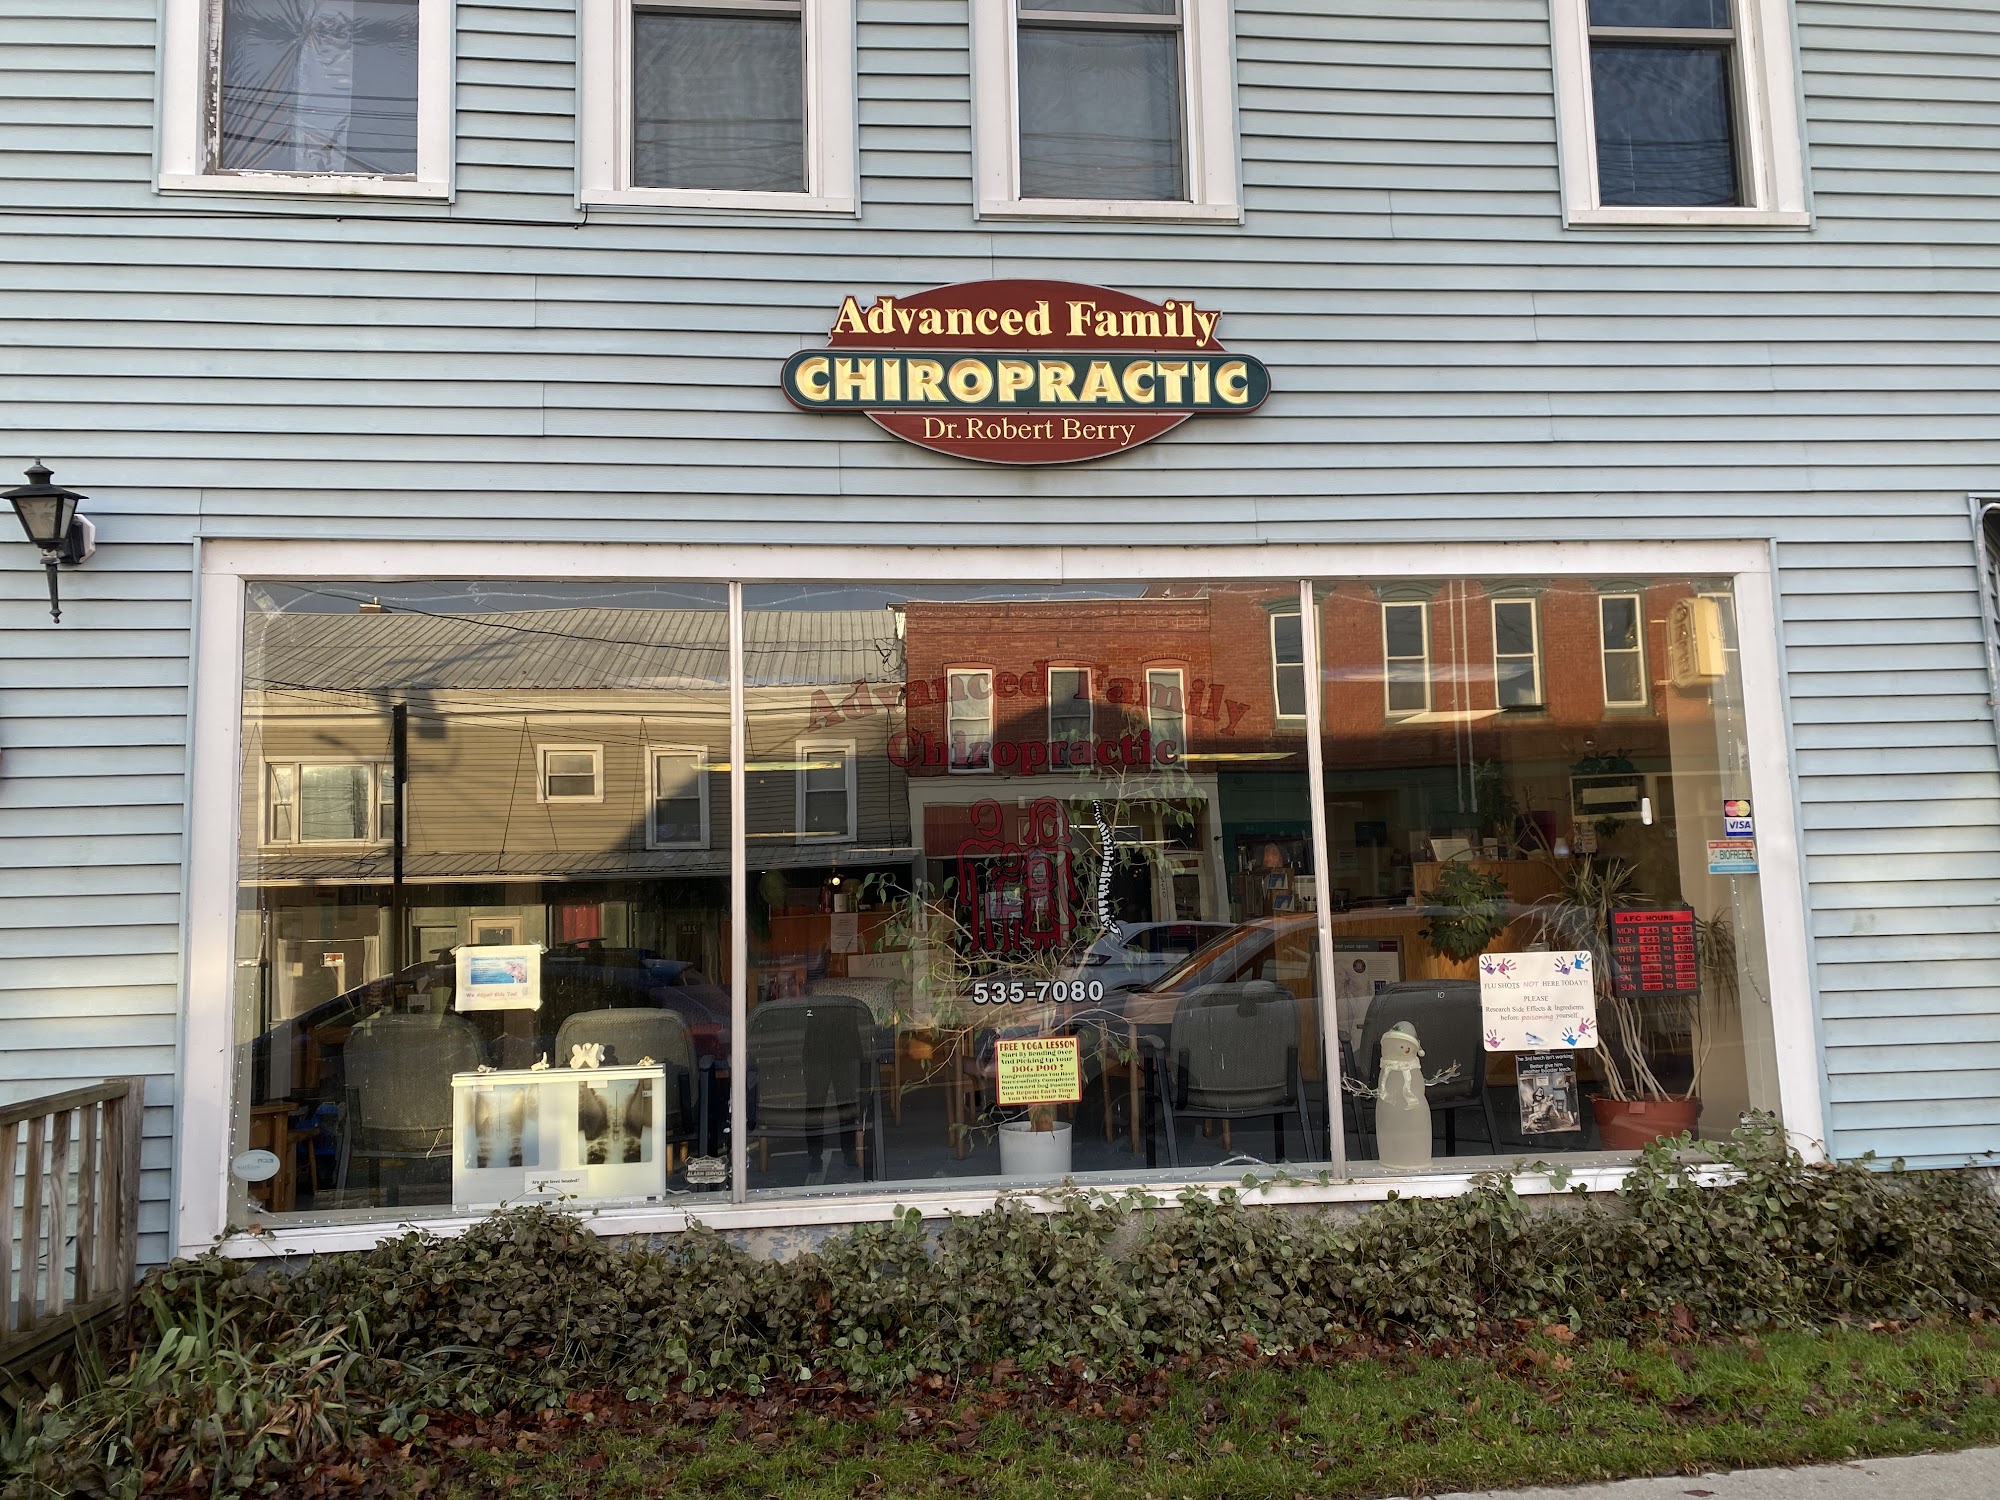 Advanced Family Chiropractic 219 W Main St, Montour Falls New York 14865